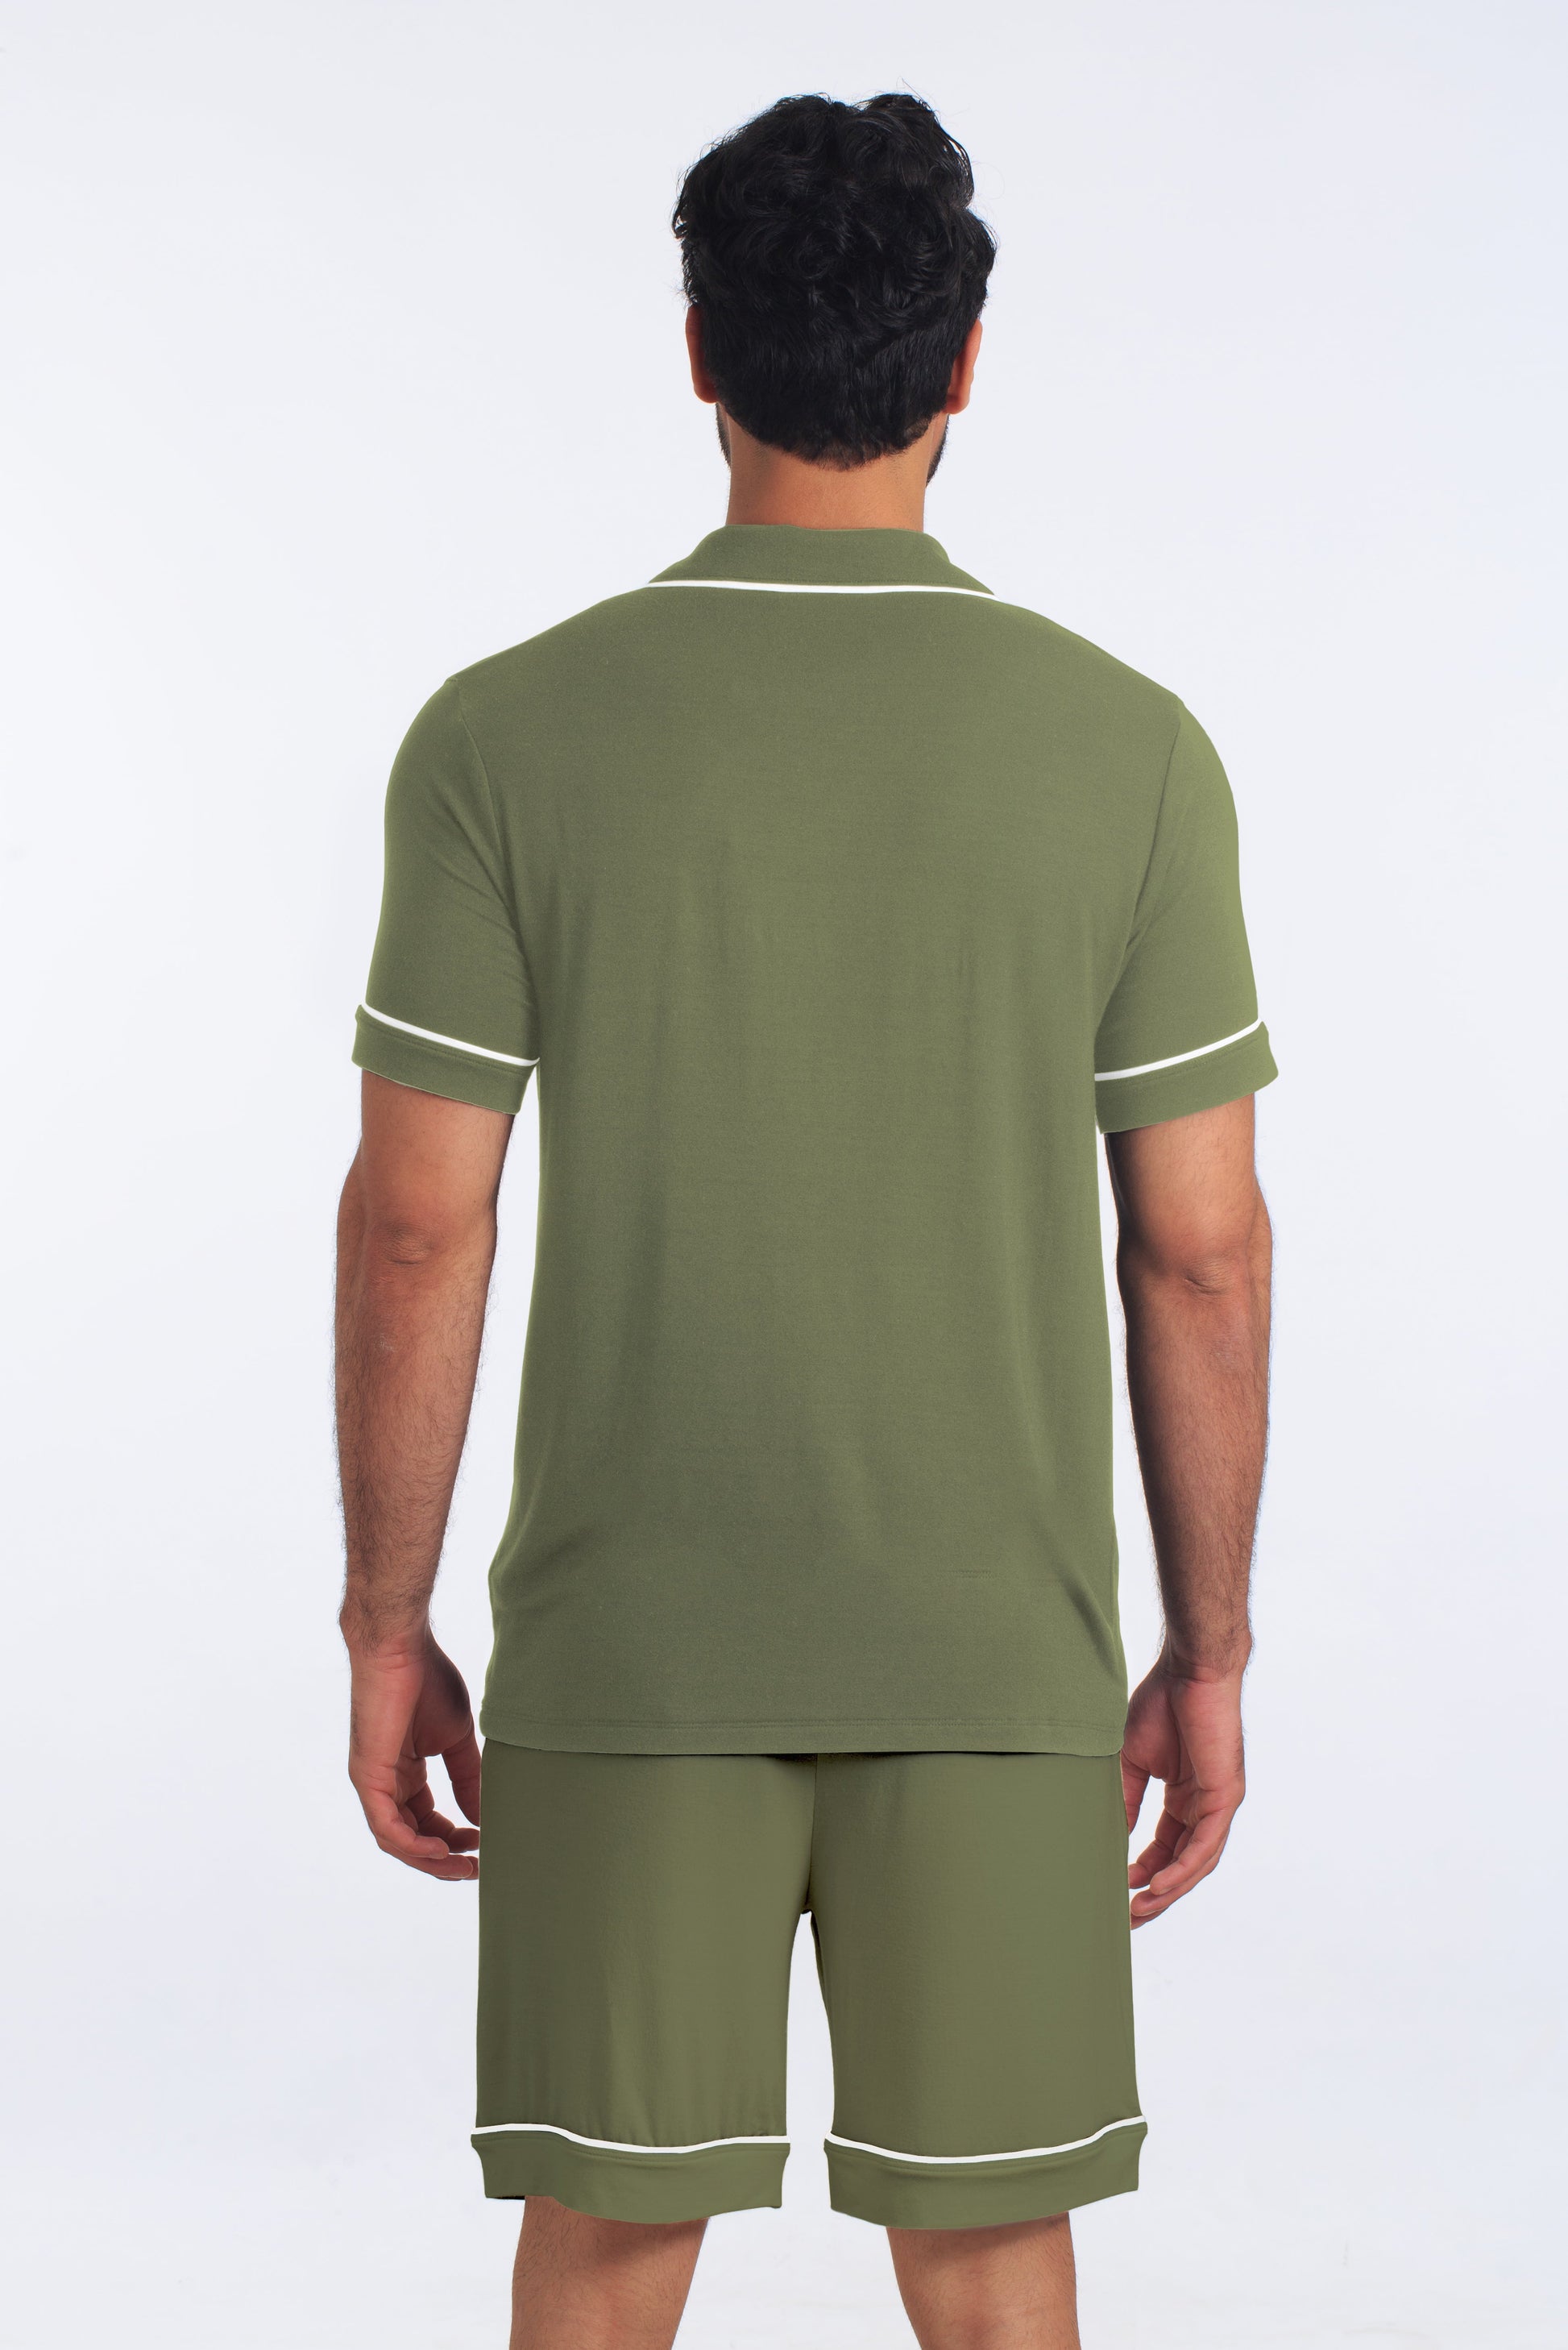 Loden Green PJ Boyfriend Set (Shirt + Short) JBFSH4115 Back